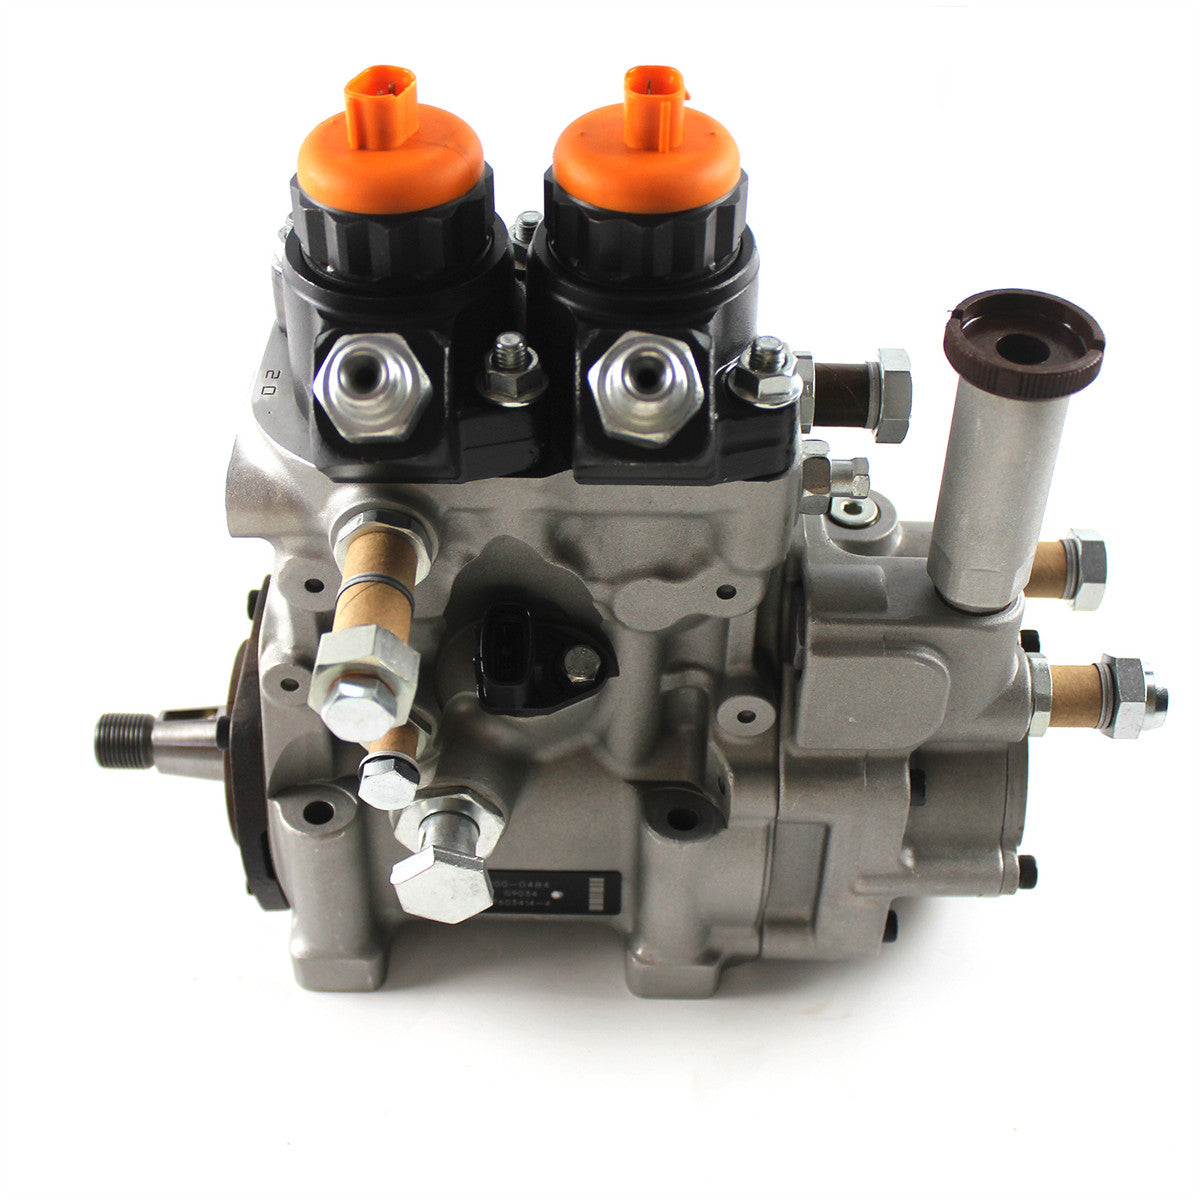 6251-71-1120 6251-71-1121 Fuel Injection Pump fits Komatsu PC400-8 PC450-8 - Sinocmp